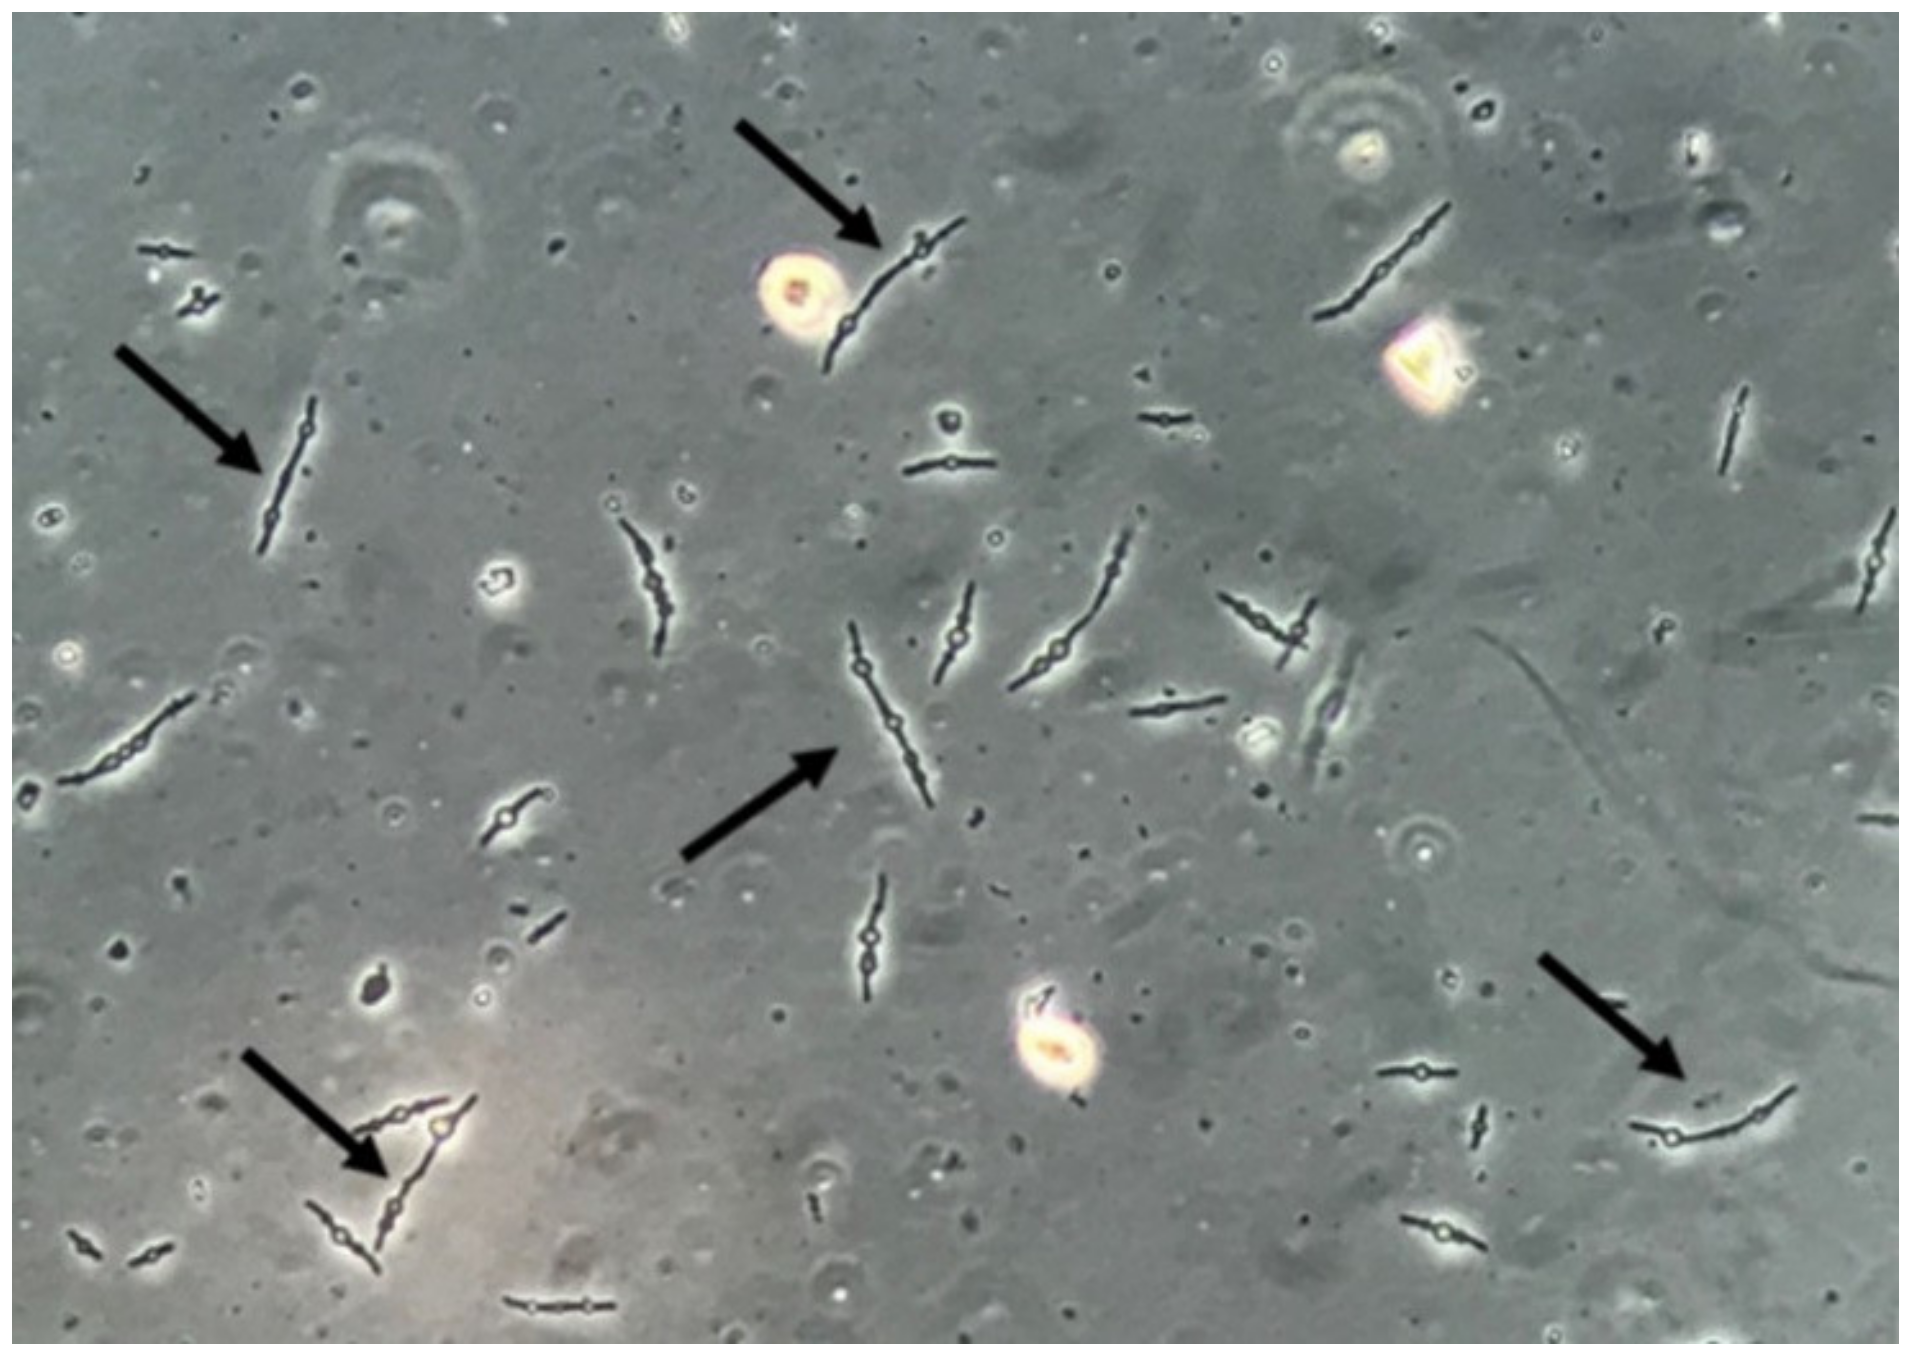 Bacteria In Urine Under Microscope 0526